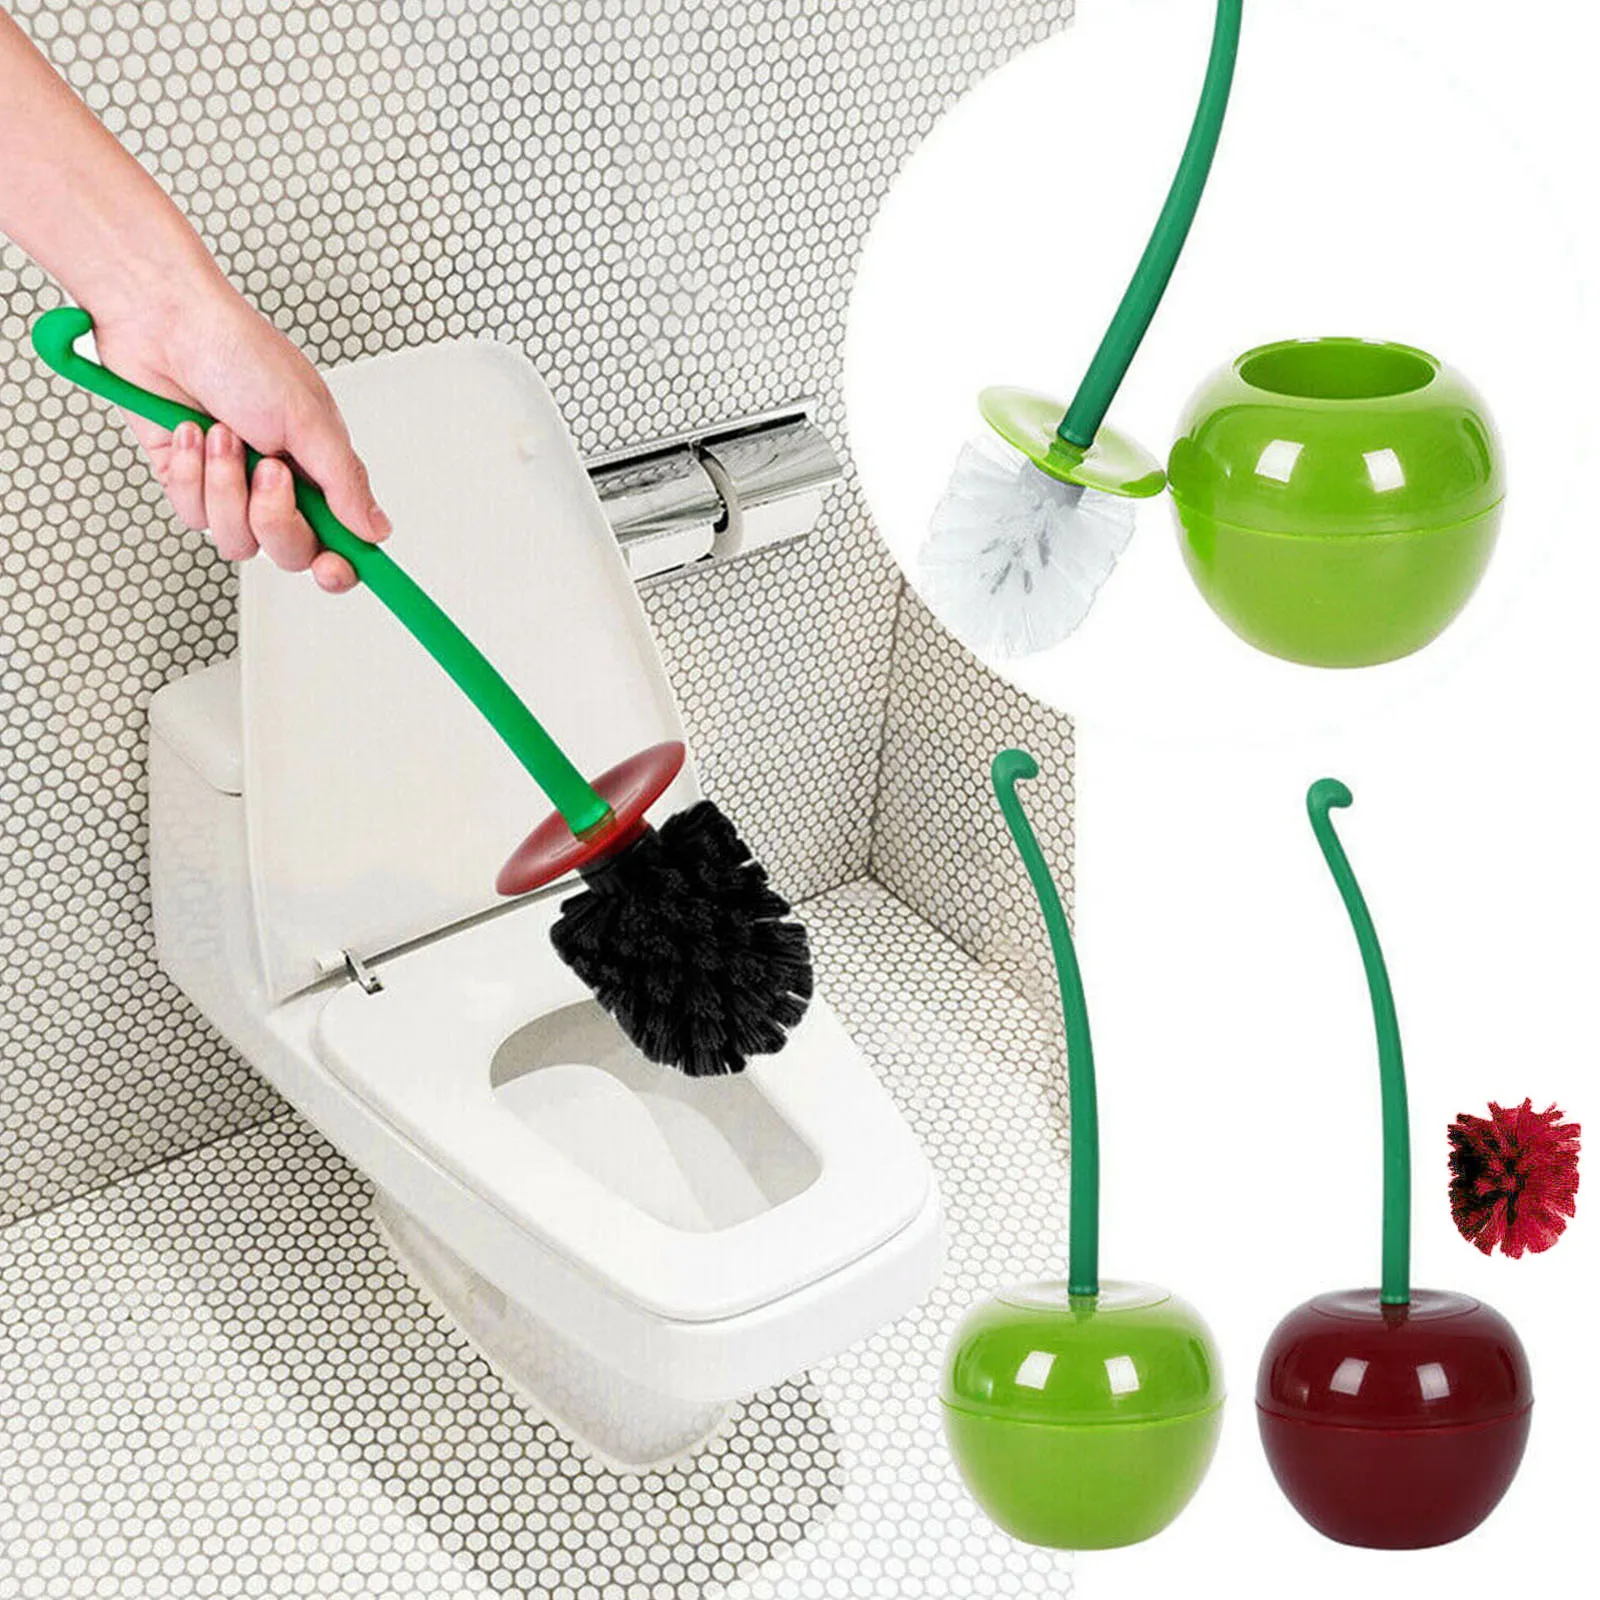 Brosse de nettoyage de toilette innovante en forme de cerise